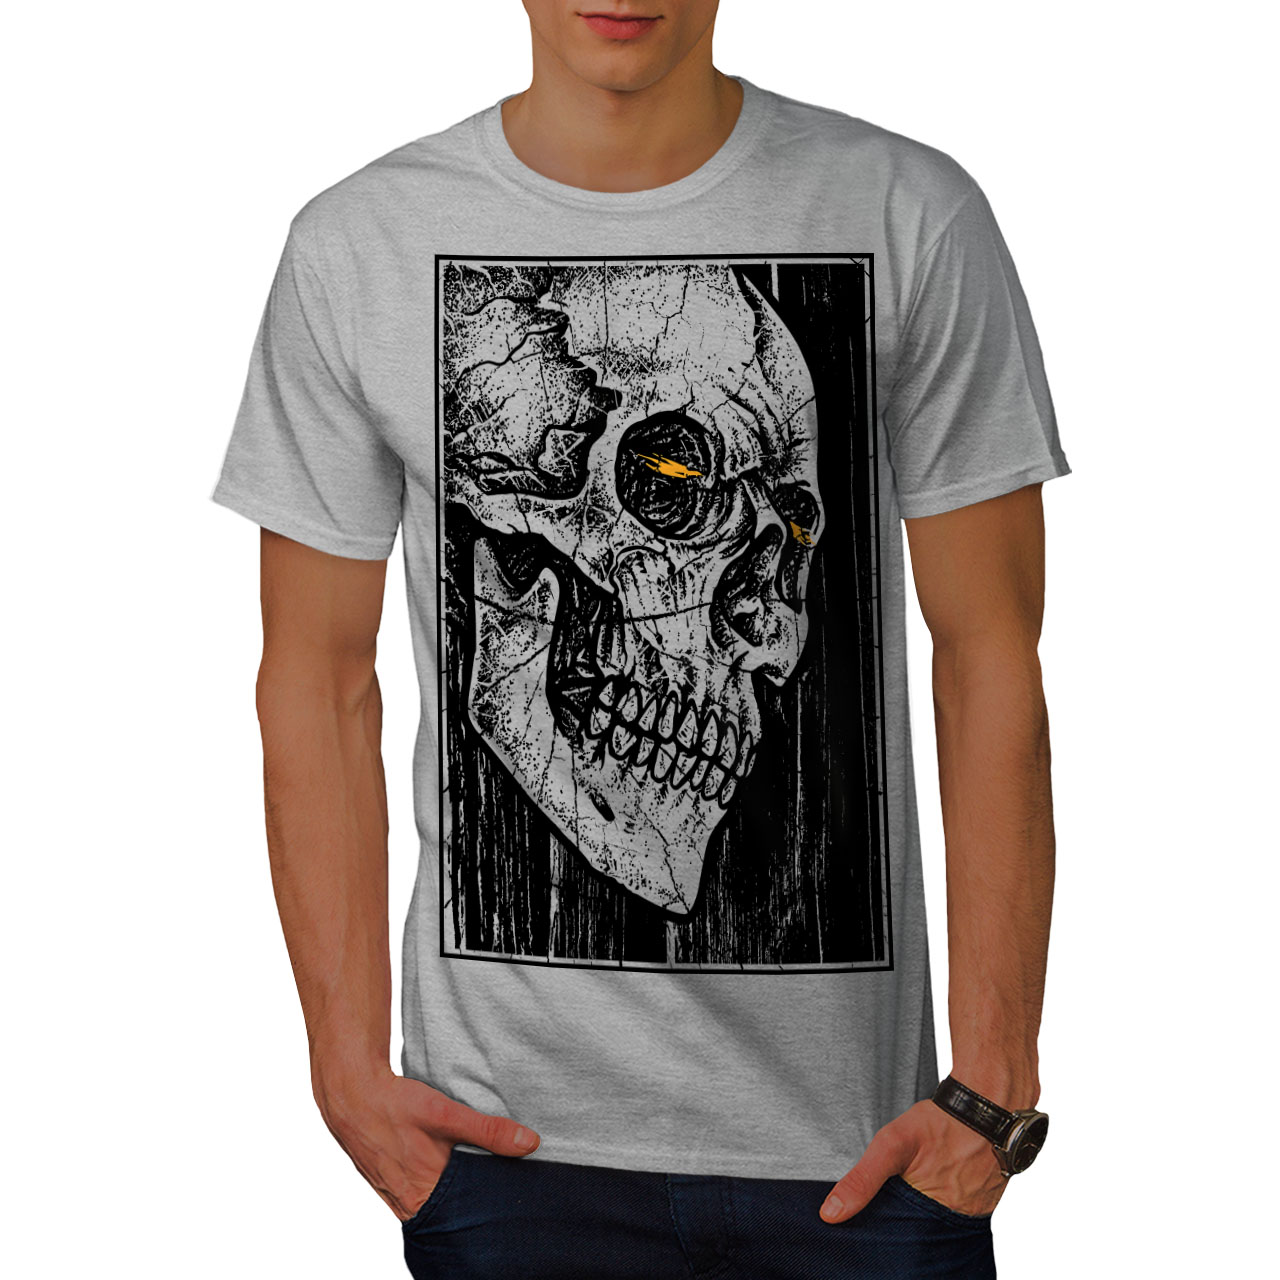 Wellcoda Death Look Cool Skull Mens T-shirt, Graphic Design Printed Tee ...